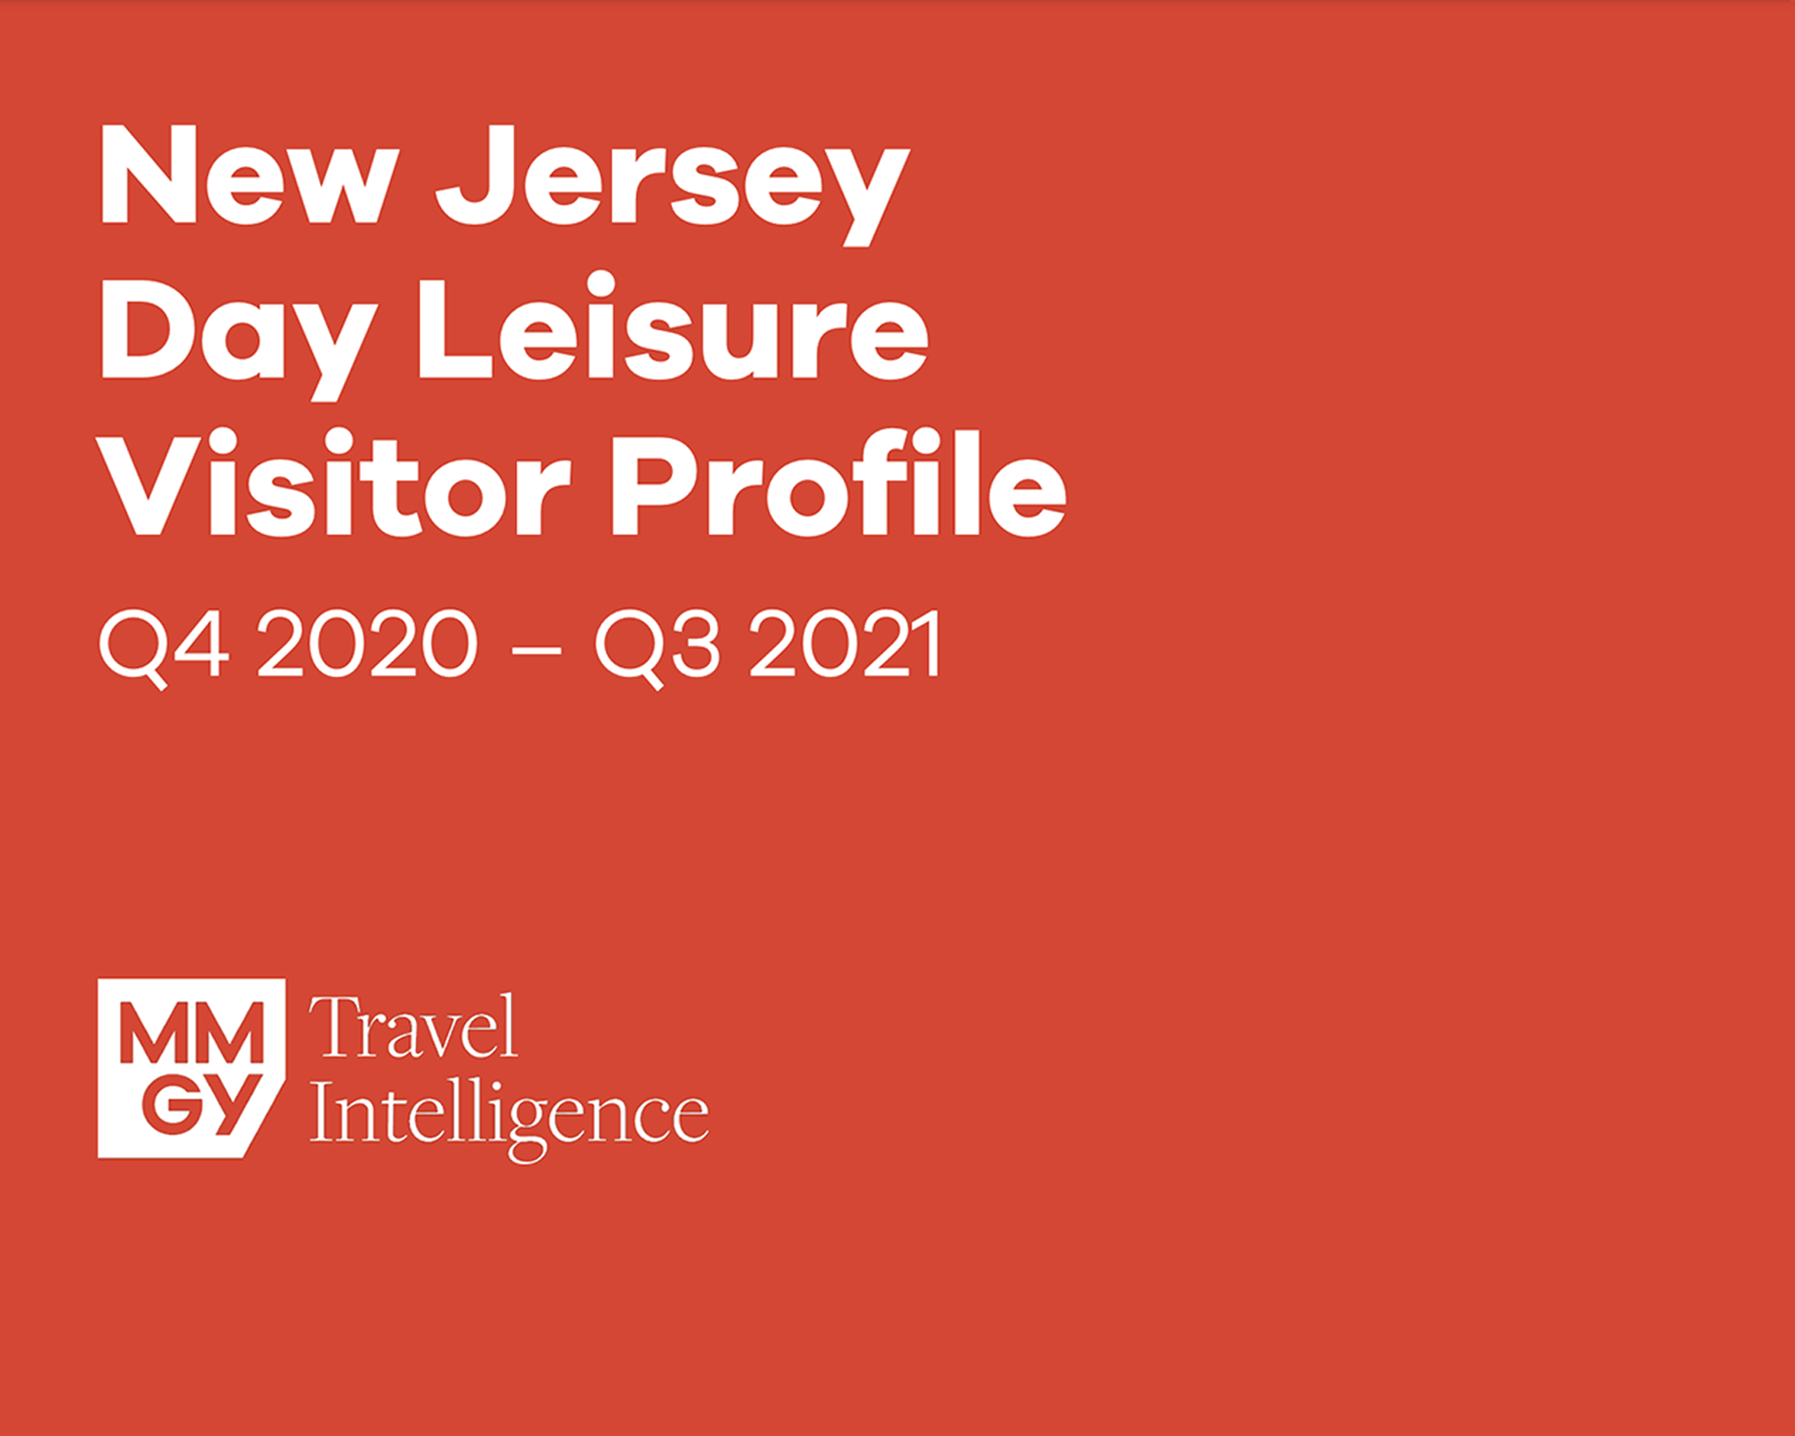 2021 Overnight Leisure Visitor Profile Study